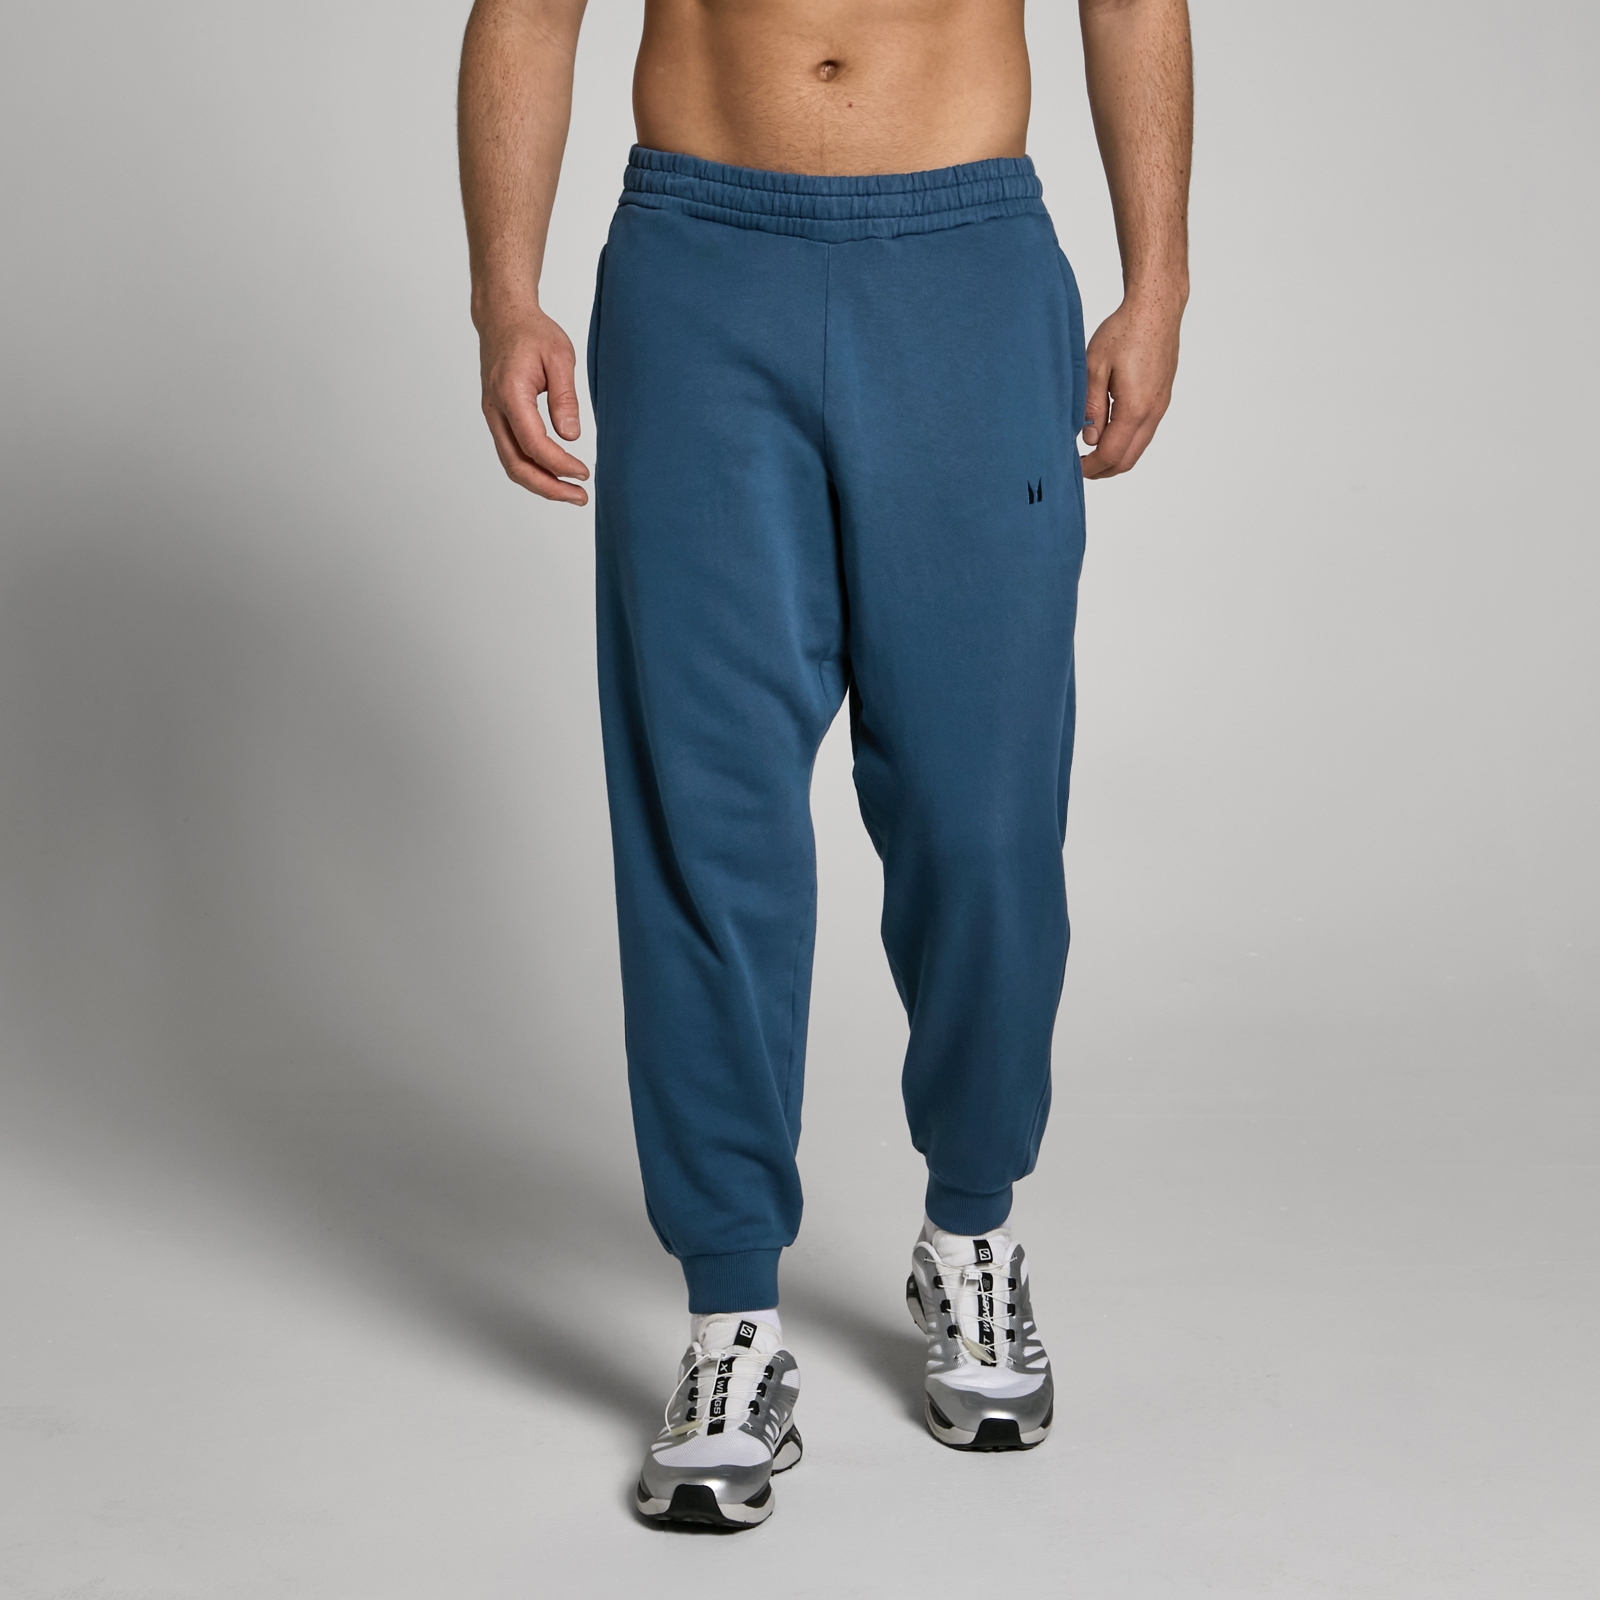 Image of Pantaloni da jogging slavati MP Tempo da uomo - Blu navy slavato - S